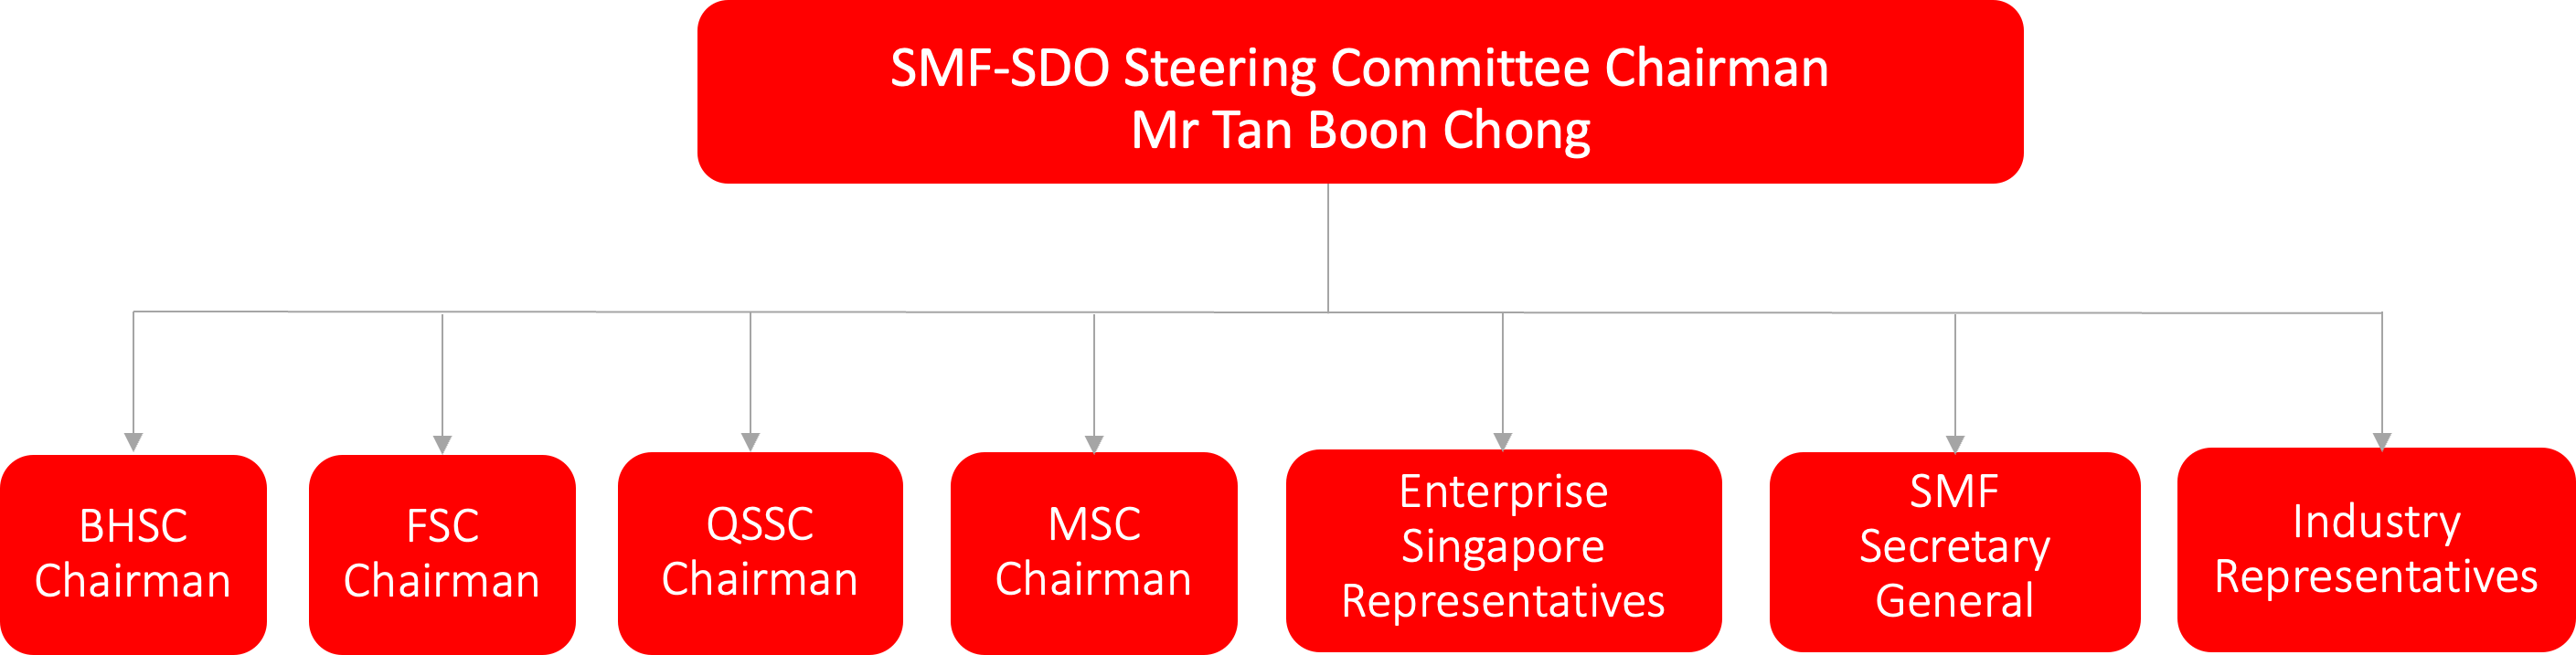 SMF-SDO Steering Committee